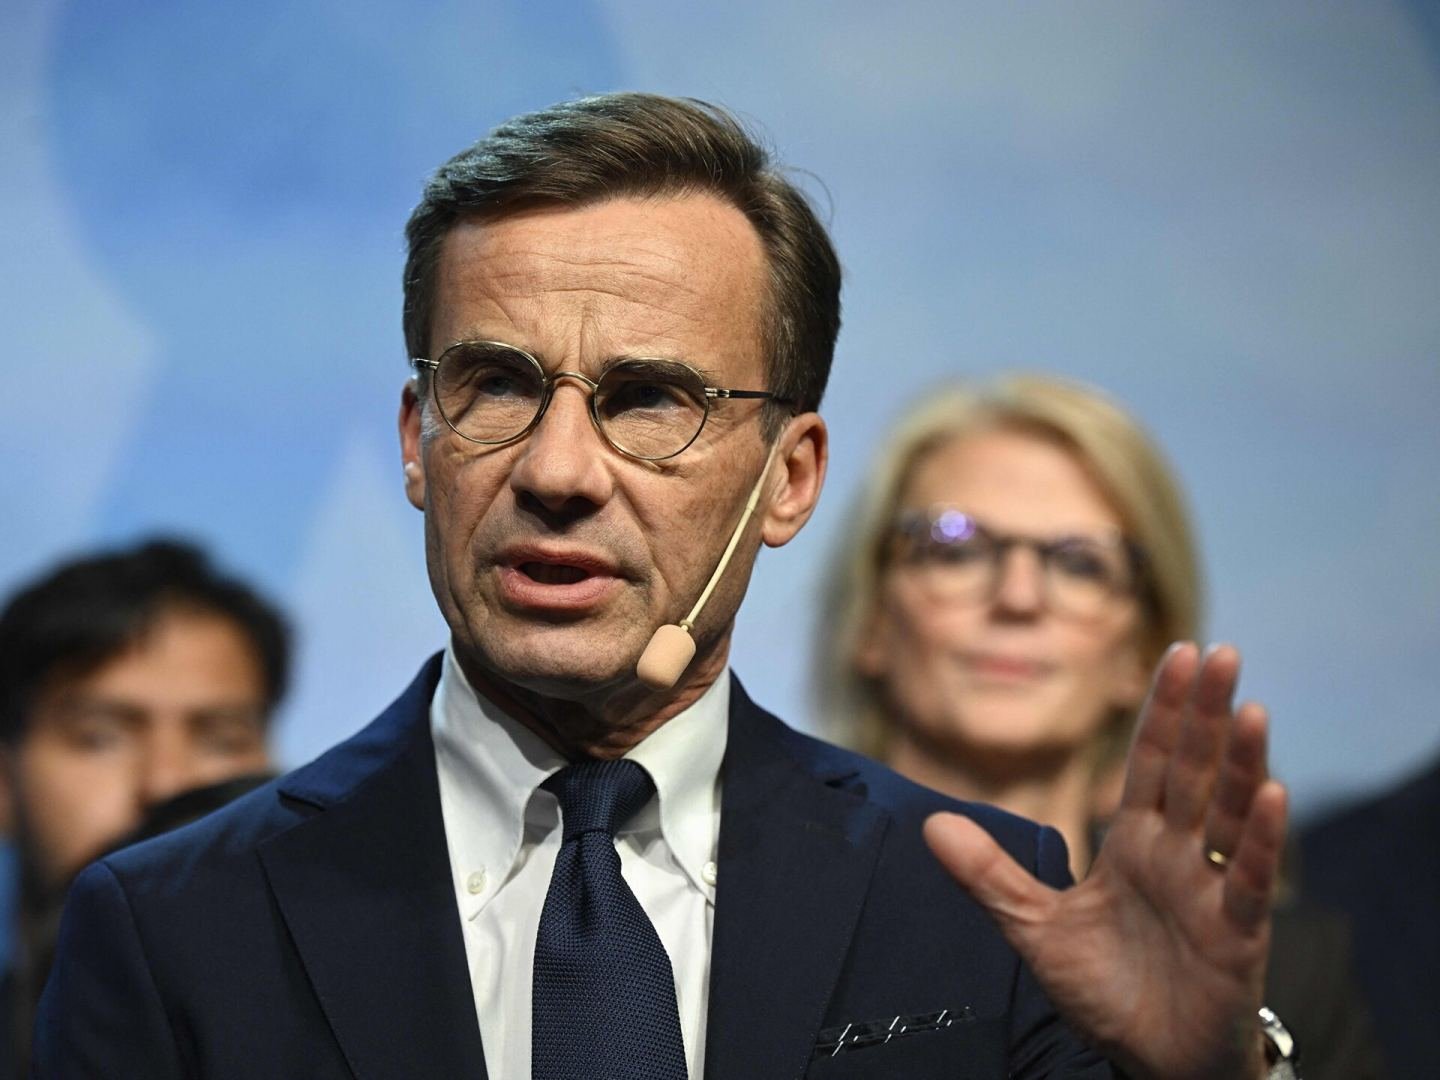 Swedish PM to arrive in Türkiye Monday for 2-day visit on NATO talks